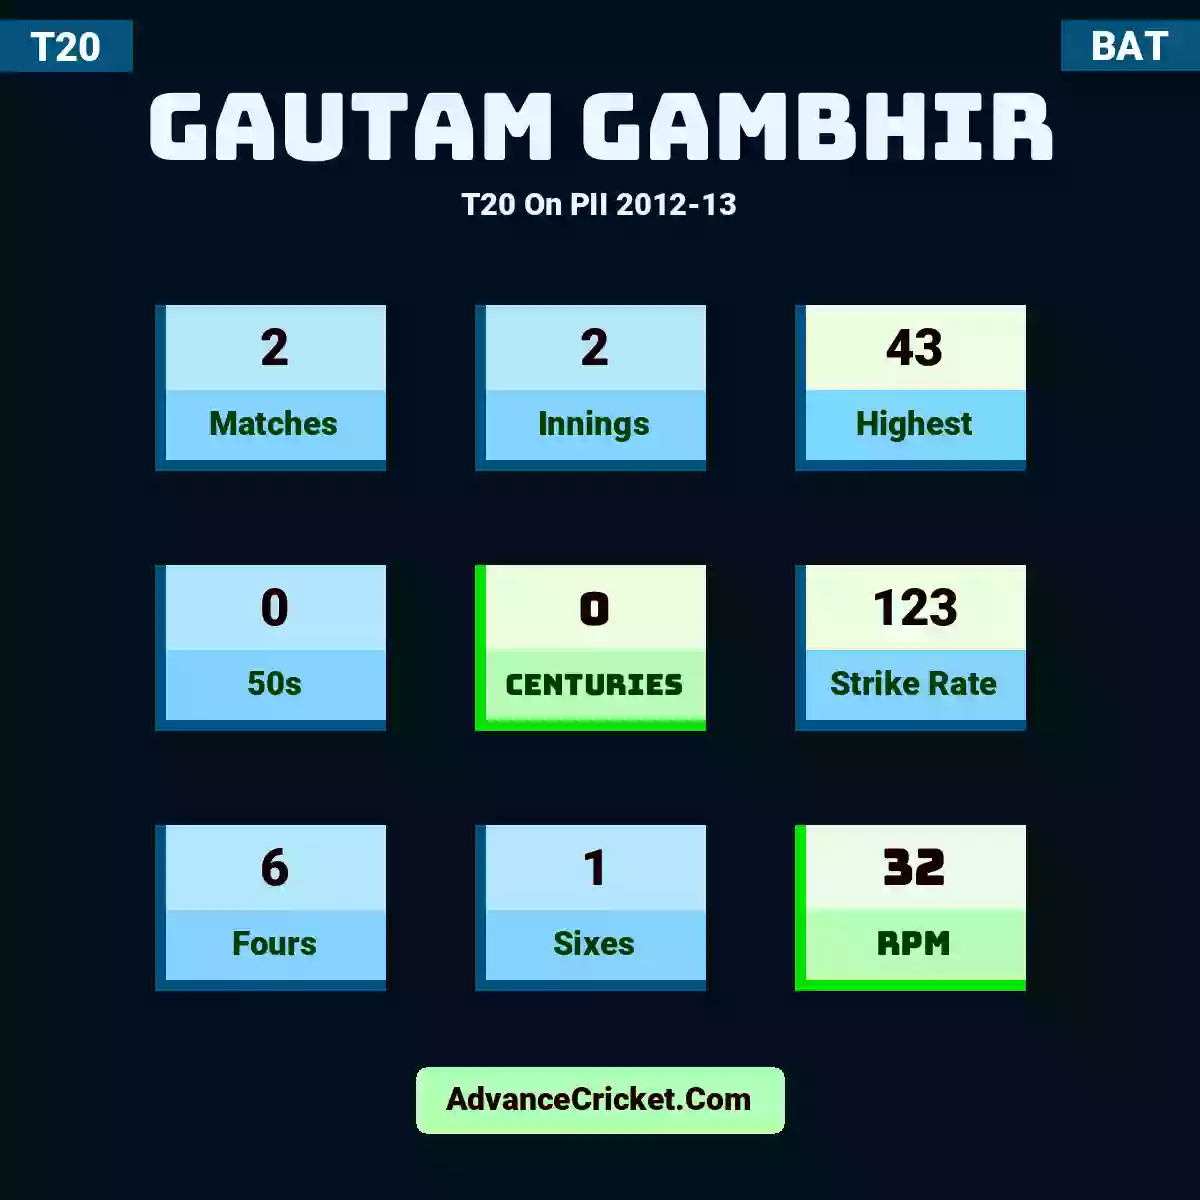 Gautam Gambhir T20  On PII 2012-13, Gautam Gambhir played 2 matches, scored 43 runs as highest, 0 half-centuries, and 0 centuries, with a strike rate of 123. G.Gambhir hit 6 fours and 1 sixes, with an RPM of 32.